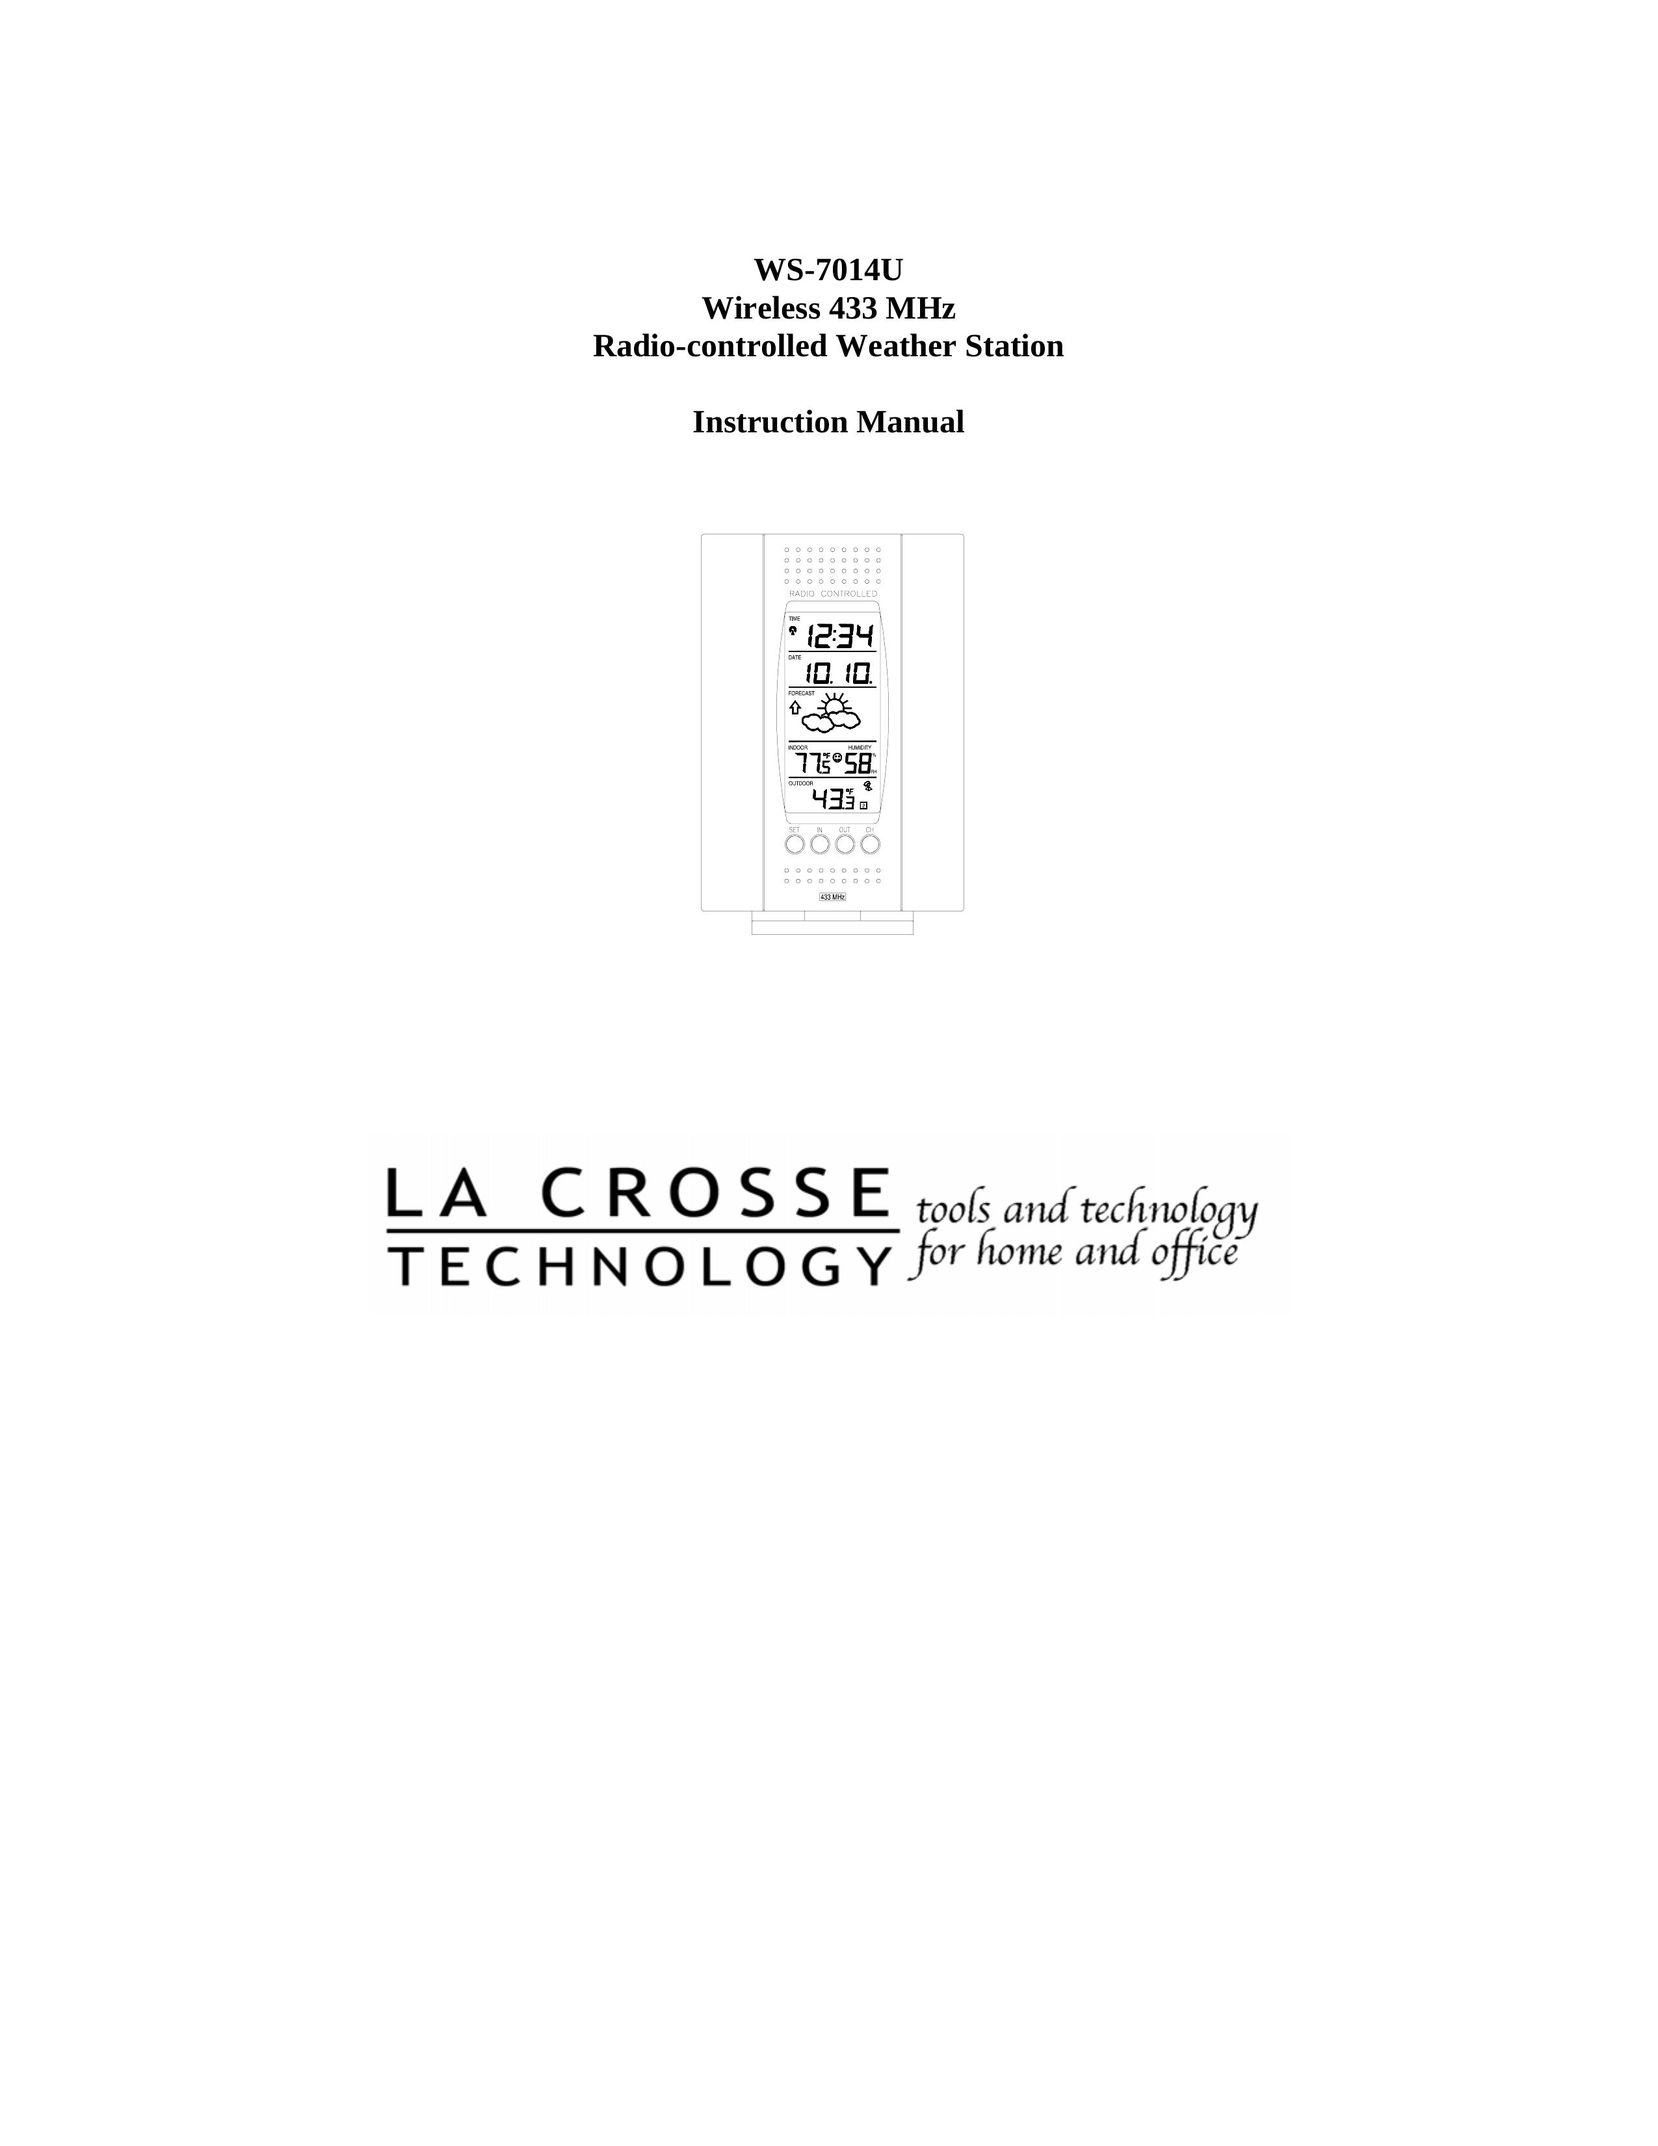 La Crosse Technology WS-7014U Portable Radio User Manual